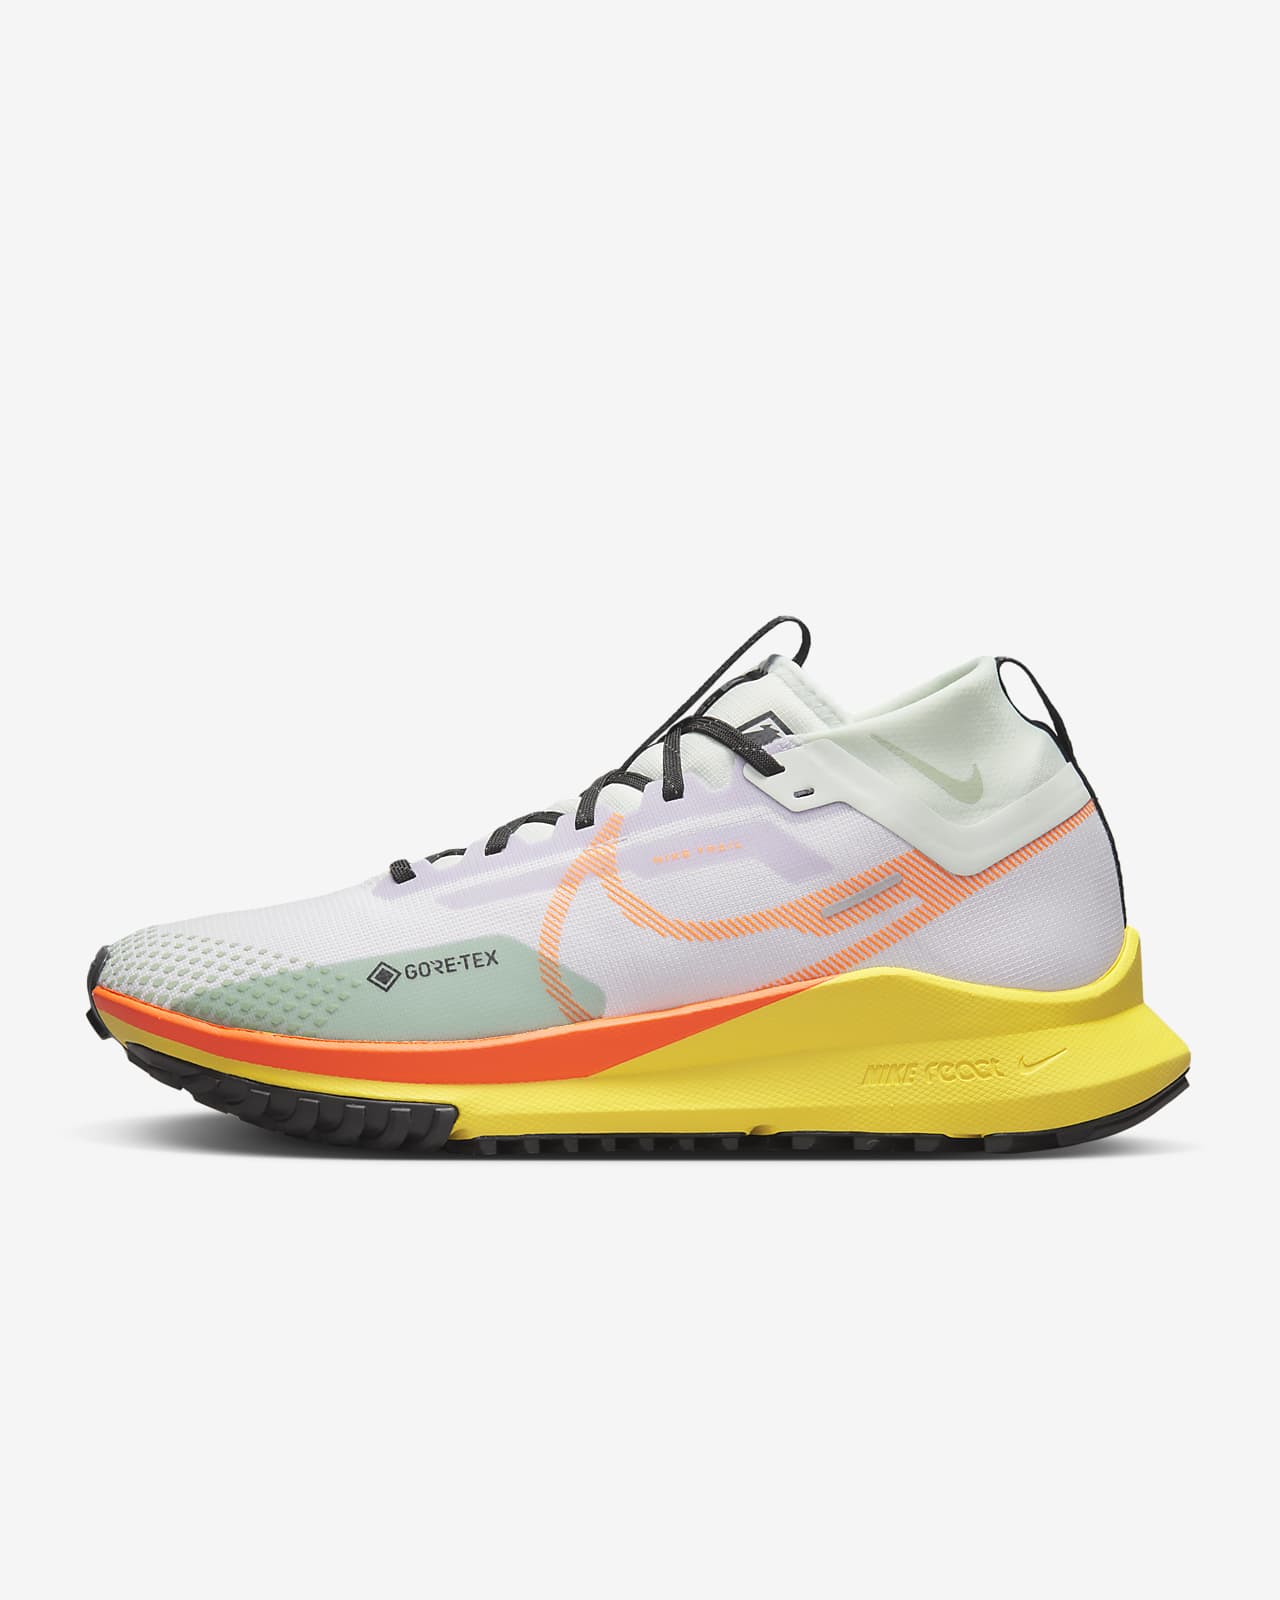 Nike React Pegasus Trail 4 GORE-TEX Men's Waterproof Trail-Running Shoes